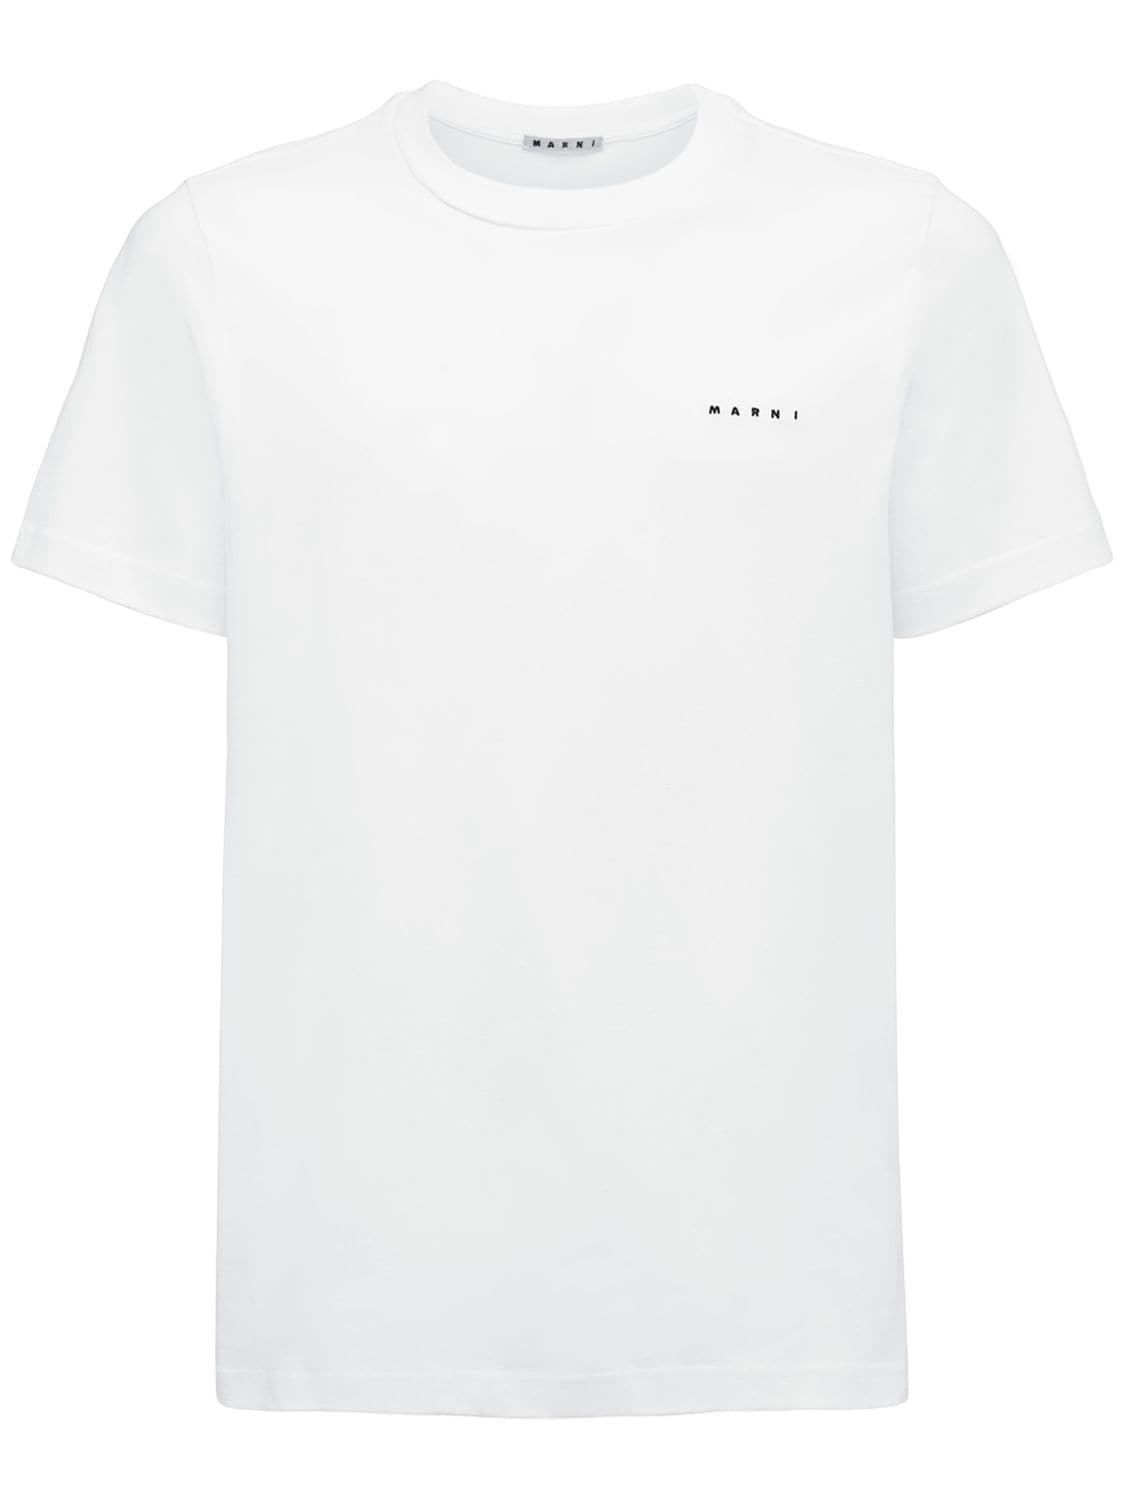 MARNI Logo Embroidered Cotton Jersey T-shirt